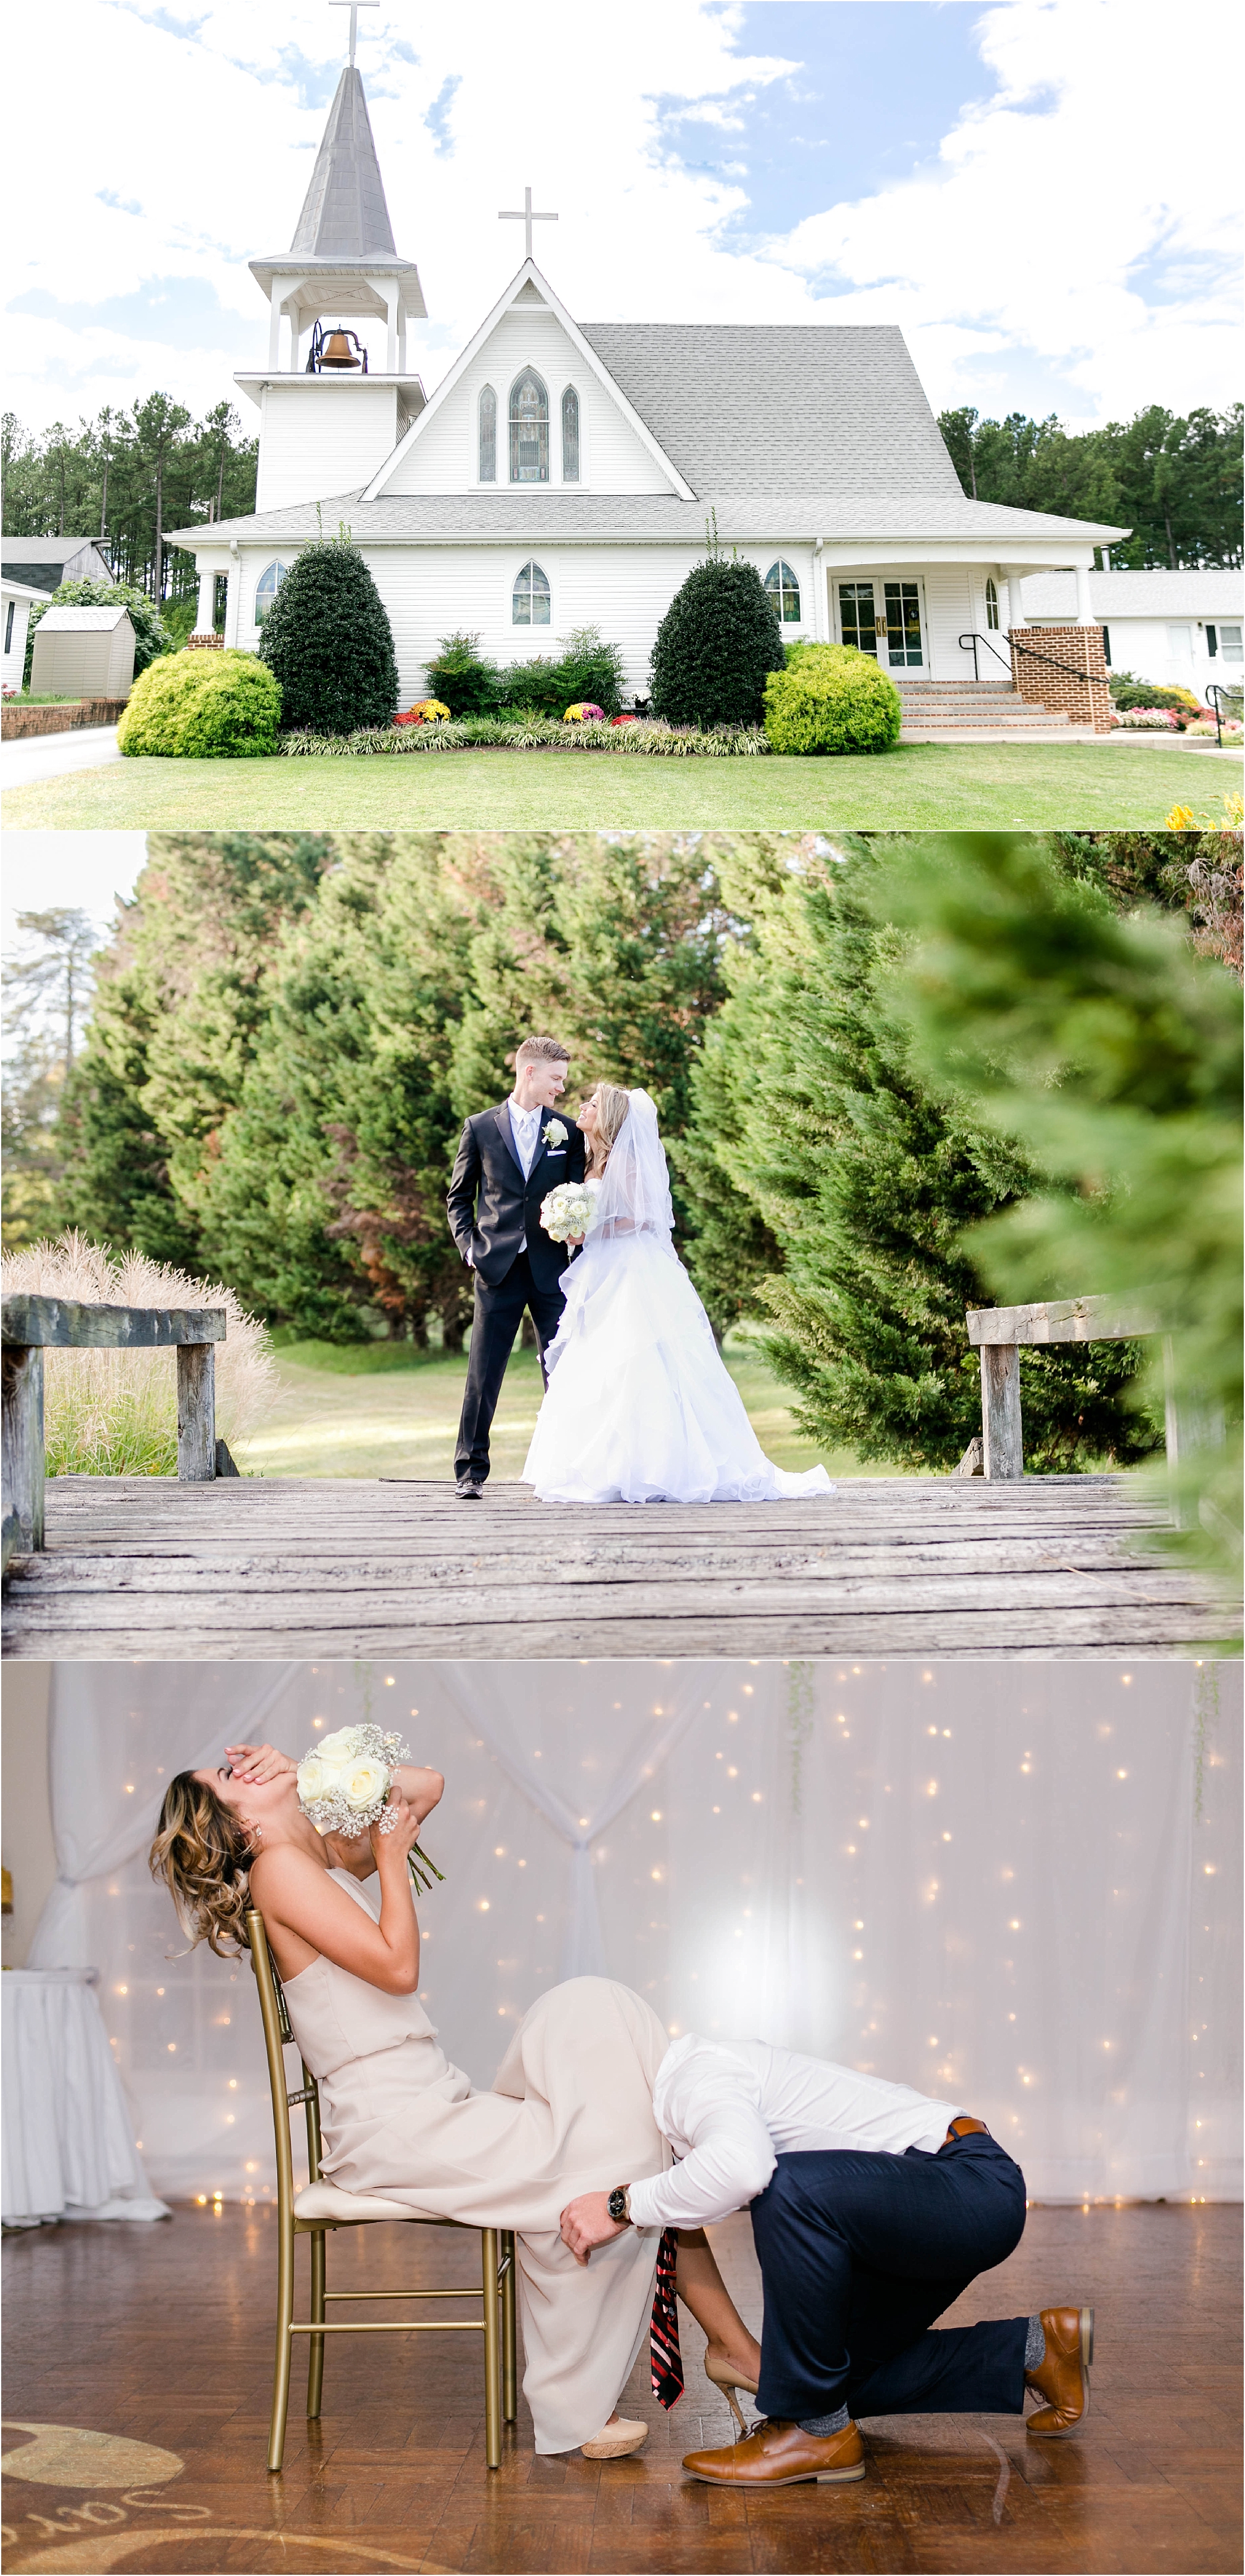 Best of 2017 Weddings Maryland Photographer